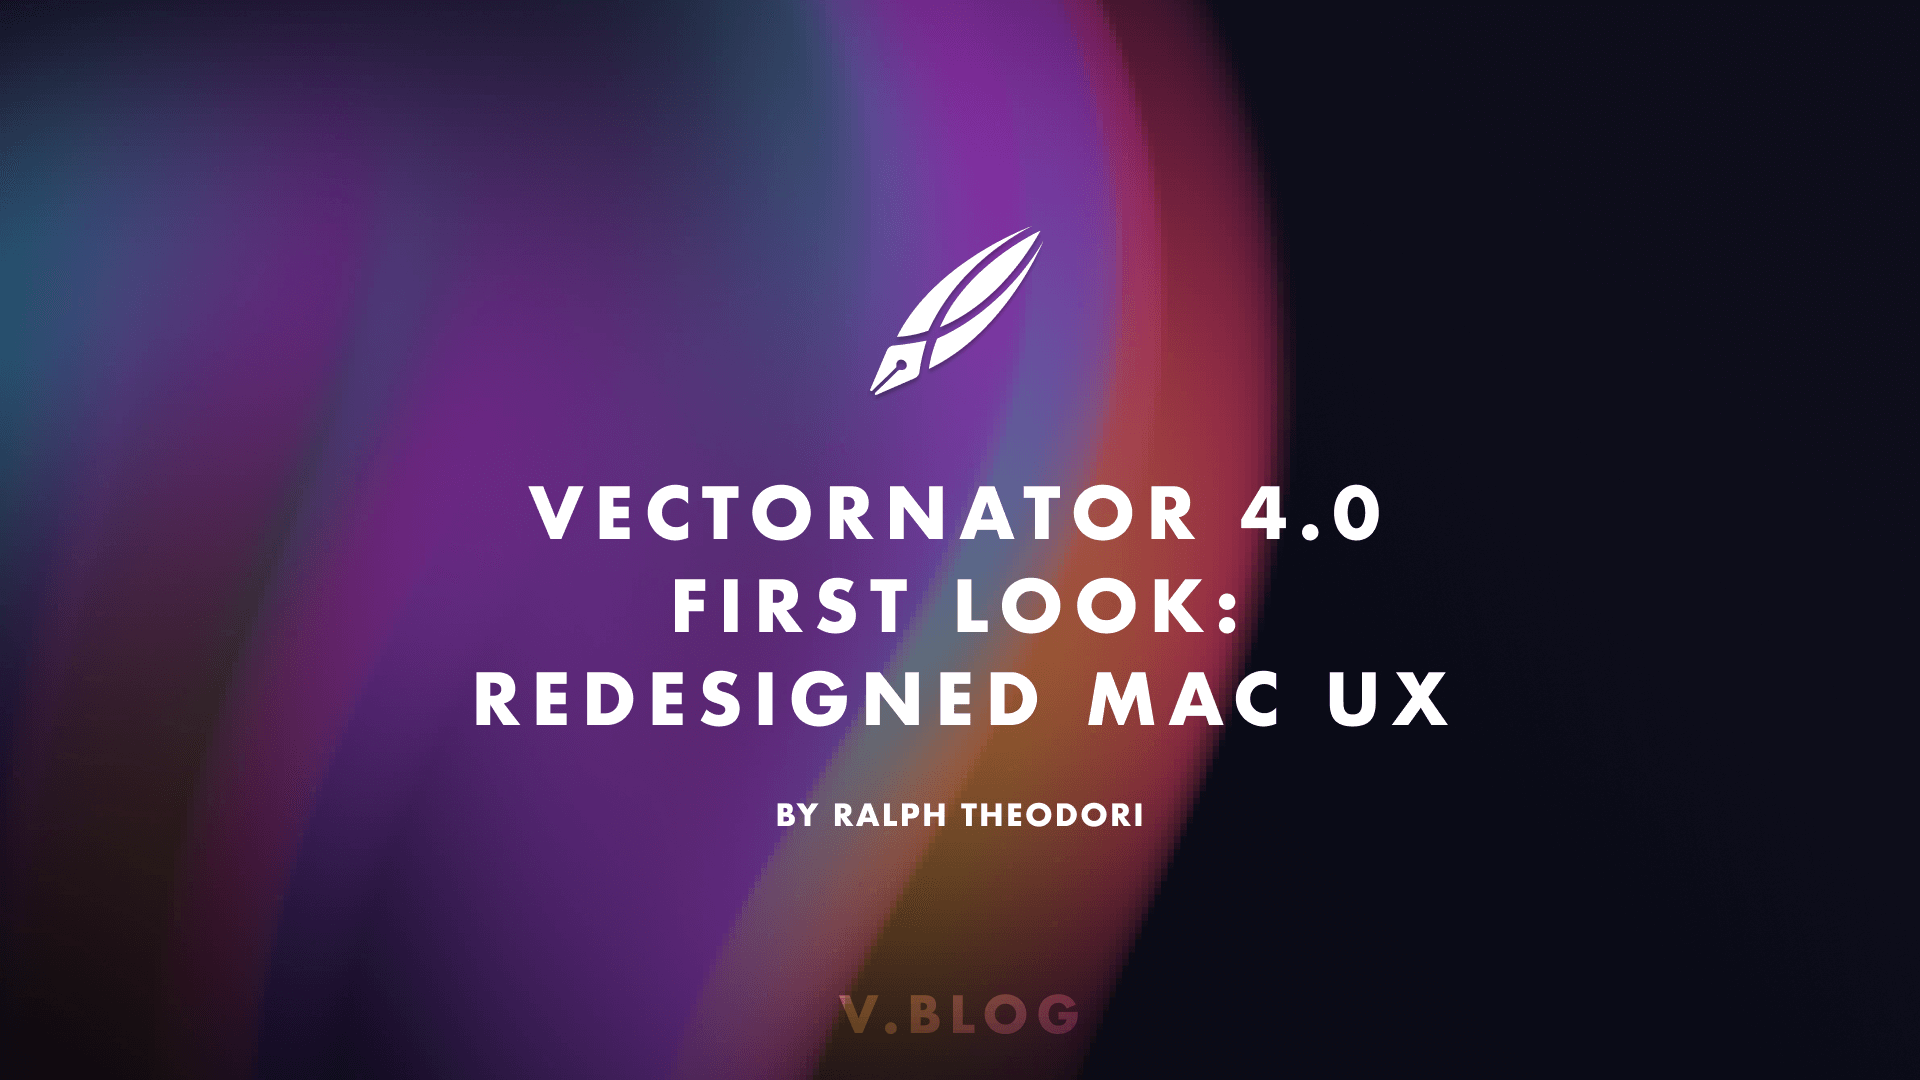 Vectornator 4.0 First Look: Redesigned Mac UX